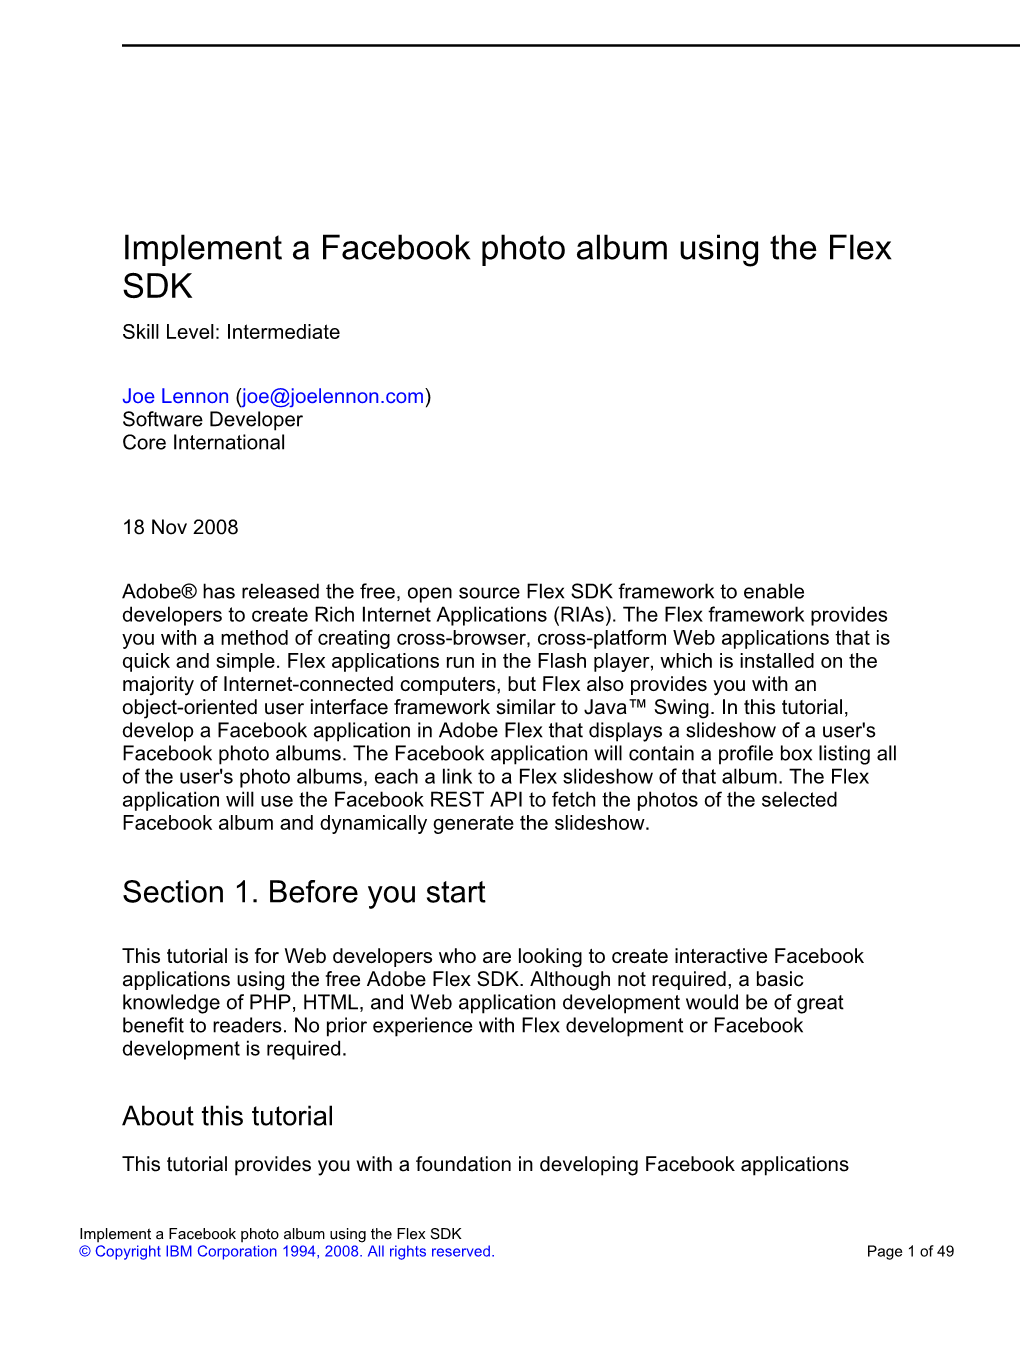 Implement a Facebook Photo Album Using the Flex SDK Skill Level: Intermediate